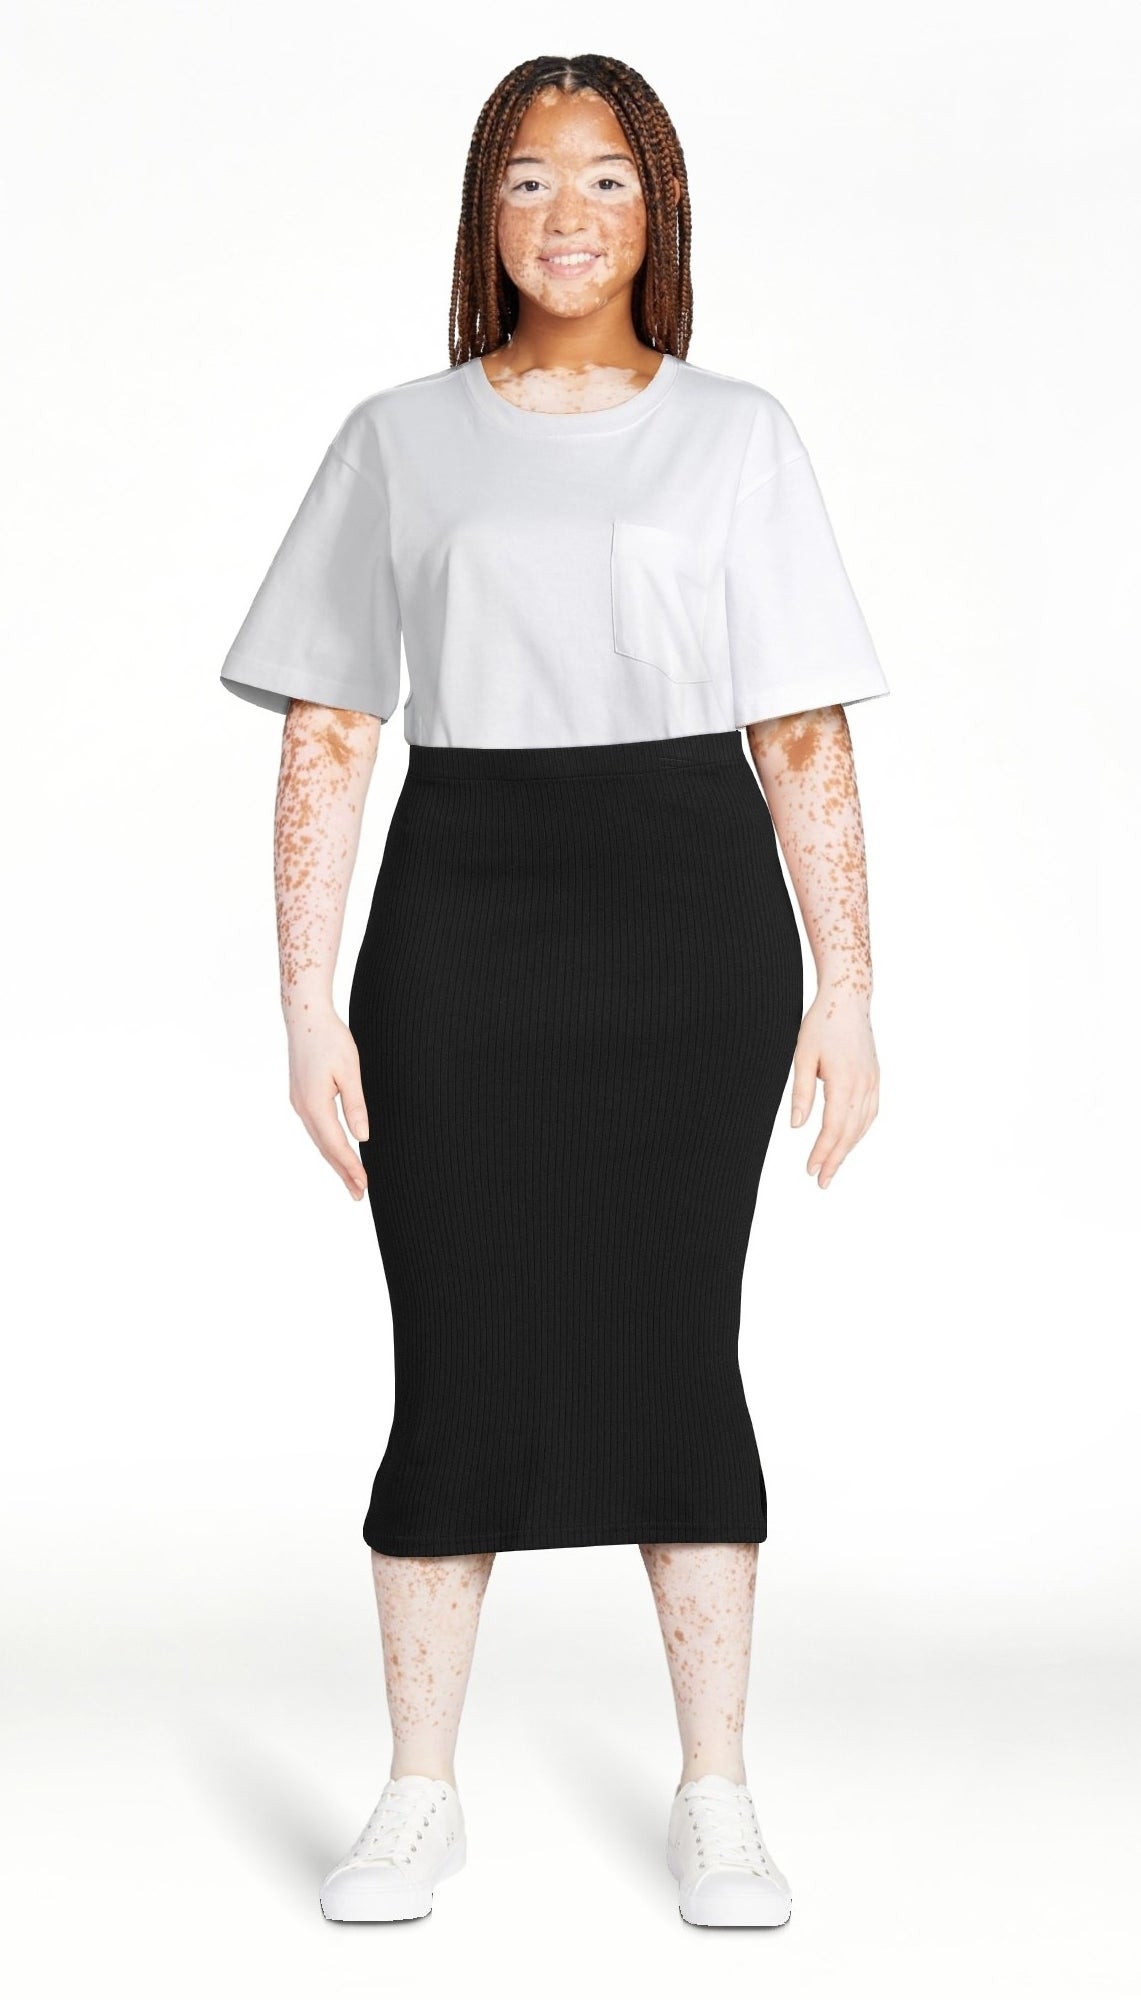 Model wearing the black soot skirt